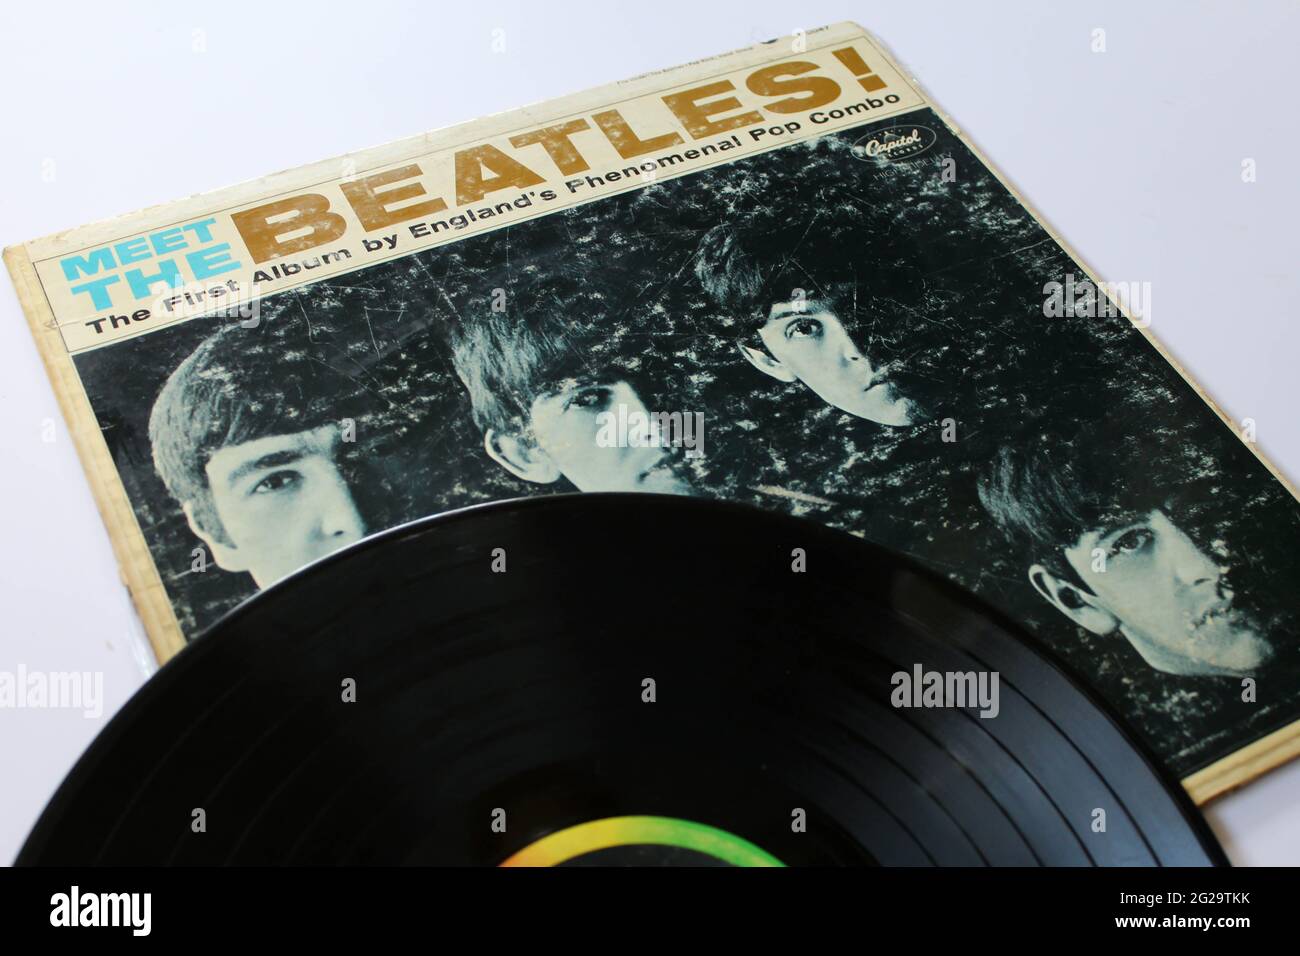 The Beatles Meet The Beatles Album Cover